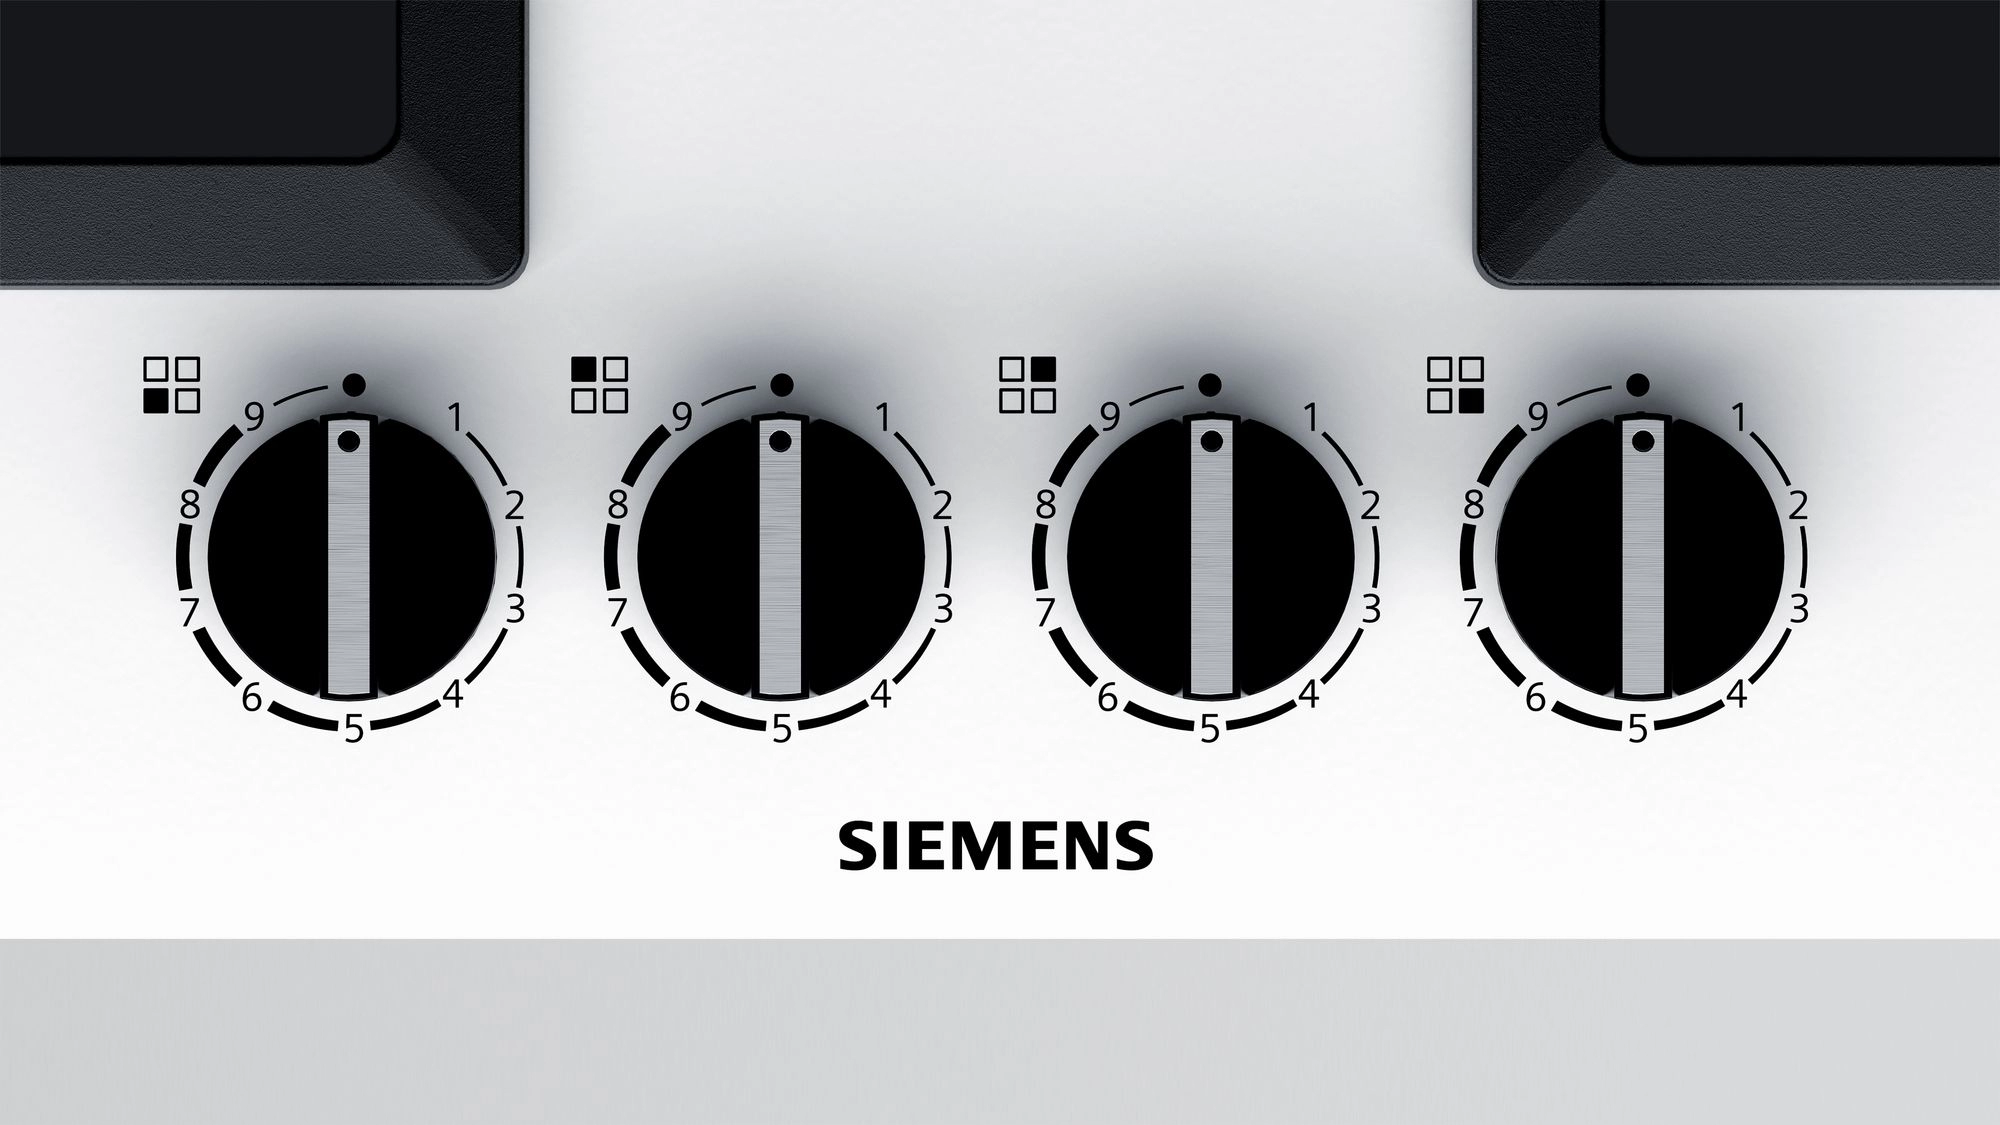 Plita cu gaz incorporabila Siemens EP6A2PB20R, 4 arzatoare, Alb